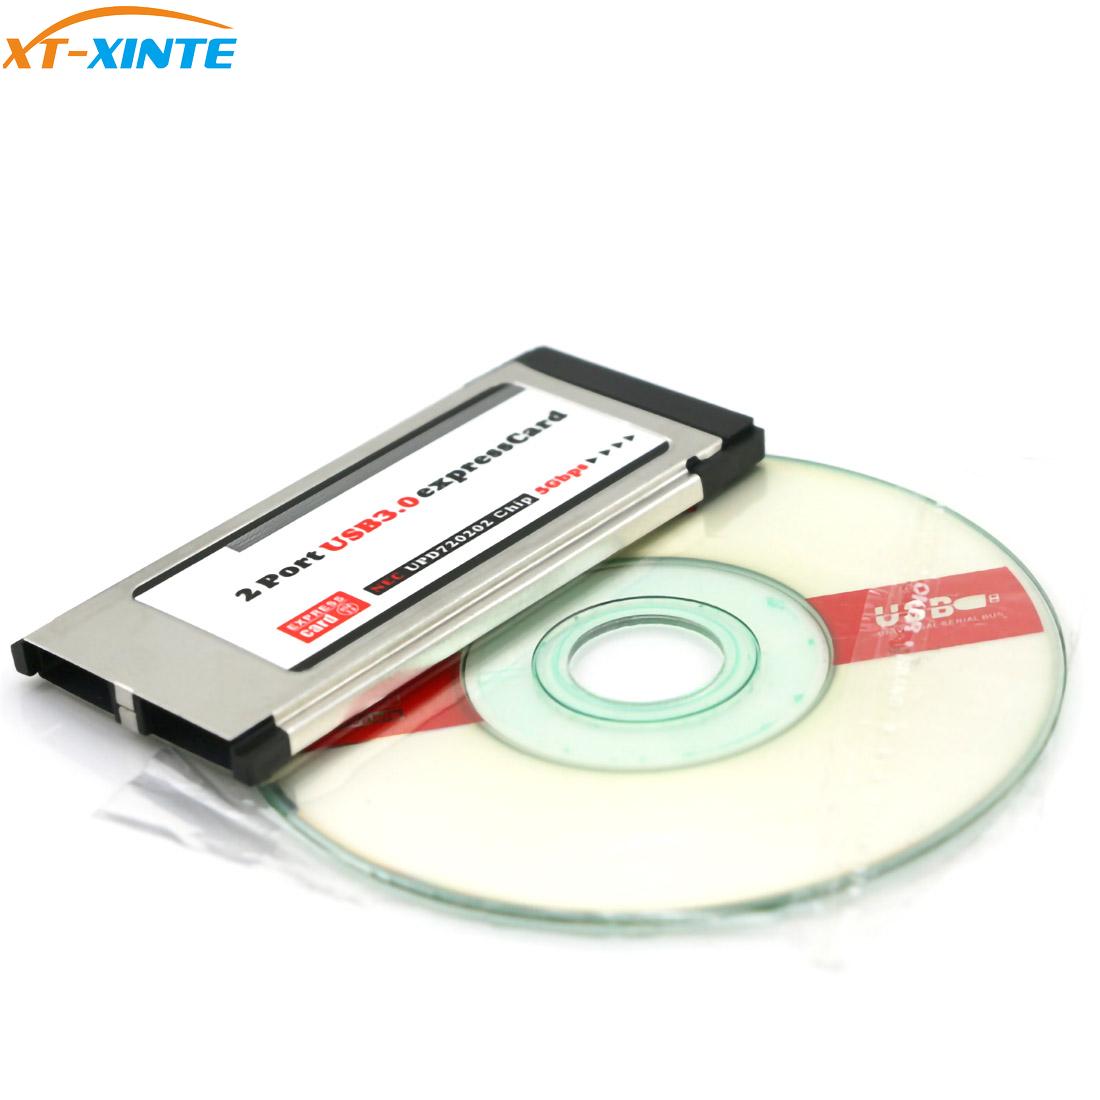 XT-XINTE LT402 USB 3.0 Notebook SuperSpeed 5Gbps 2 Port 34MM Expand Card 